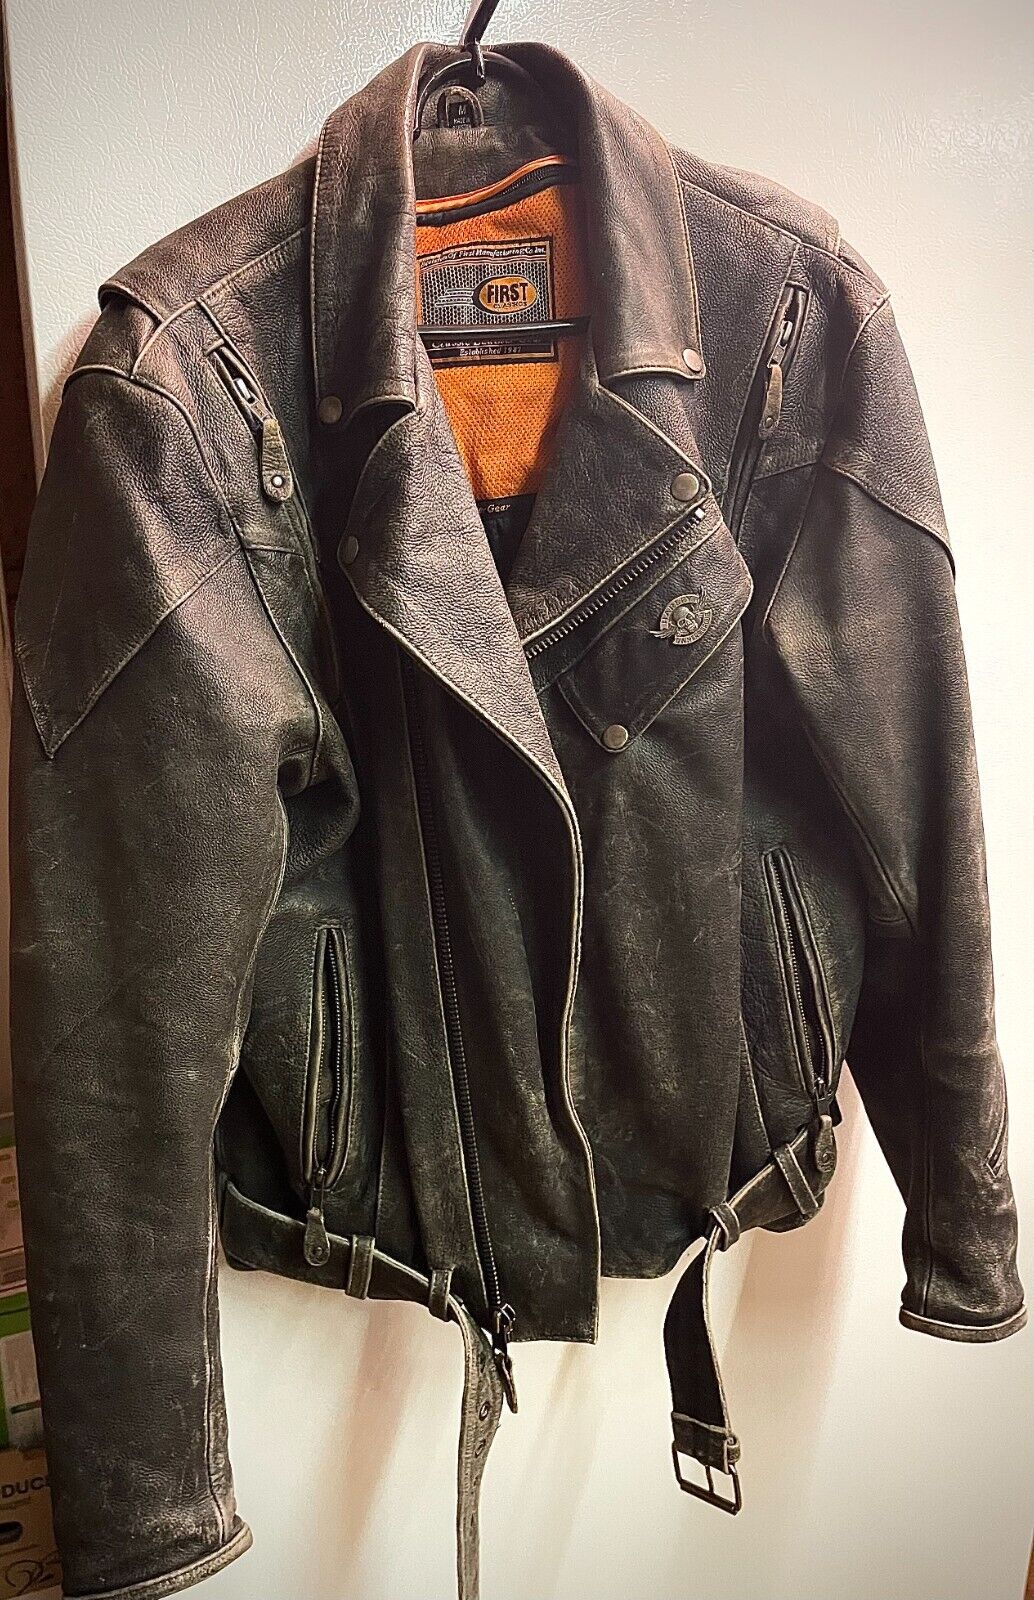 first gear motorcycle jacket/ vintage look (new)